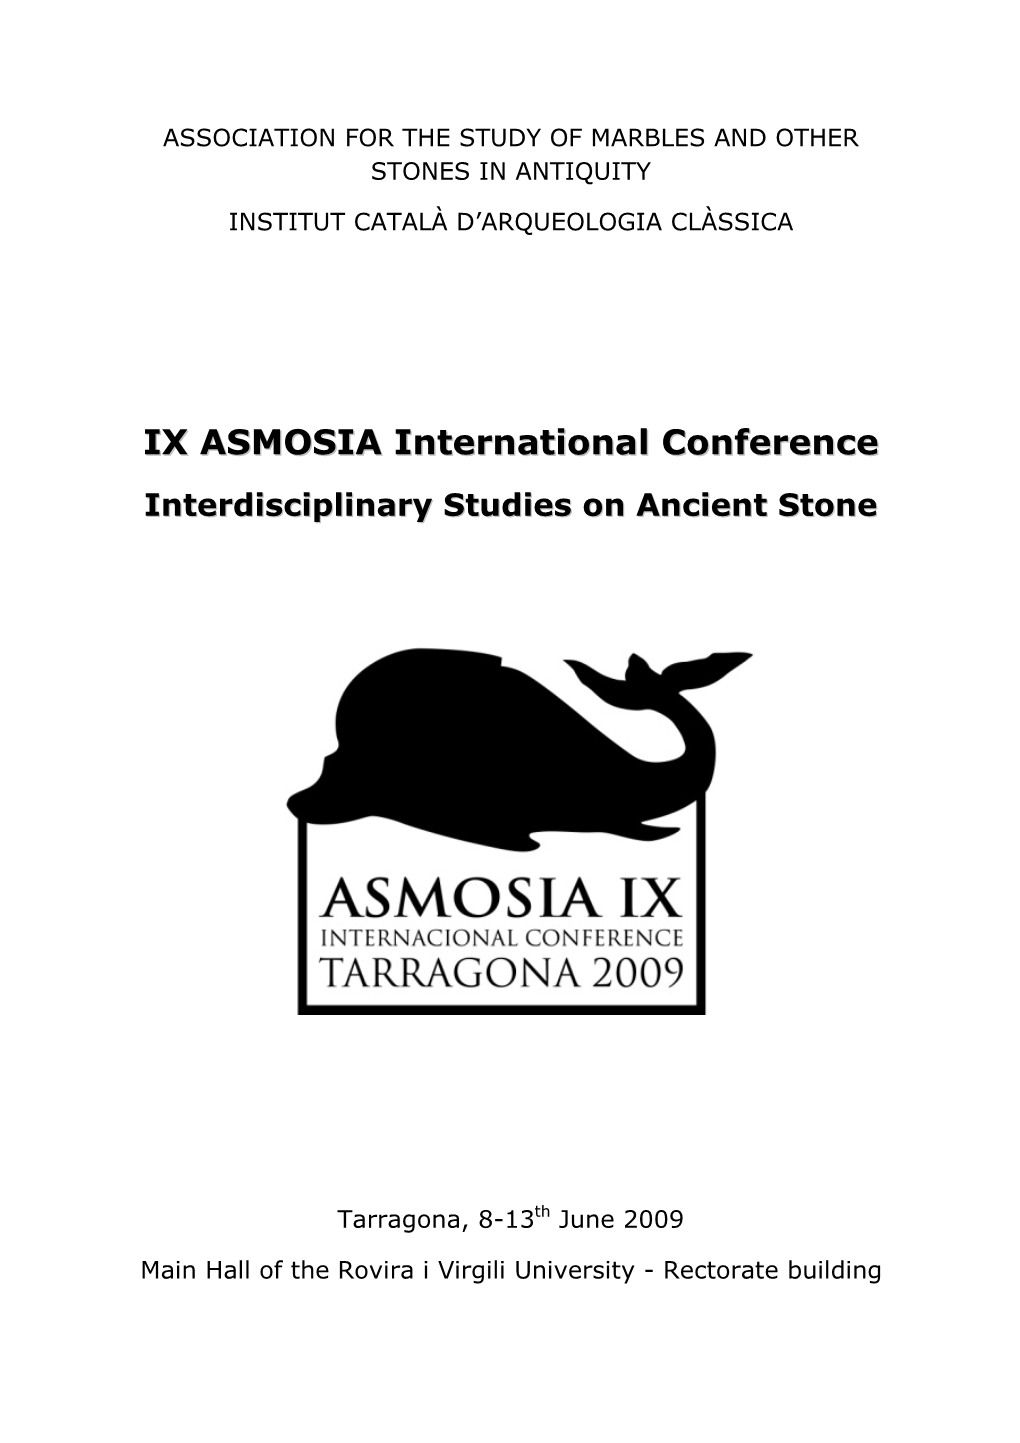 IX ASMOSIA International Conference Interdisciplinary Studies on Ancient Stone